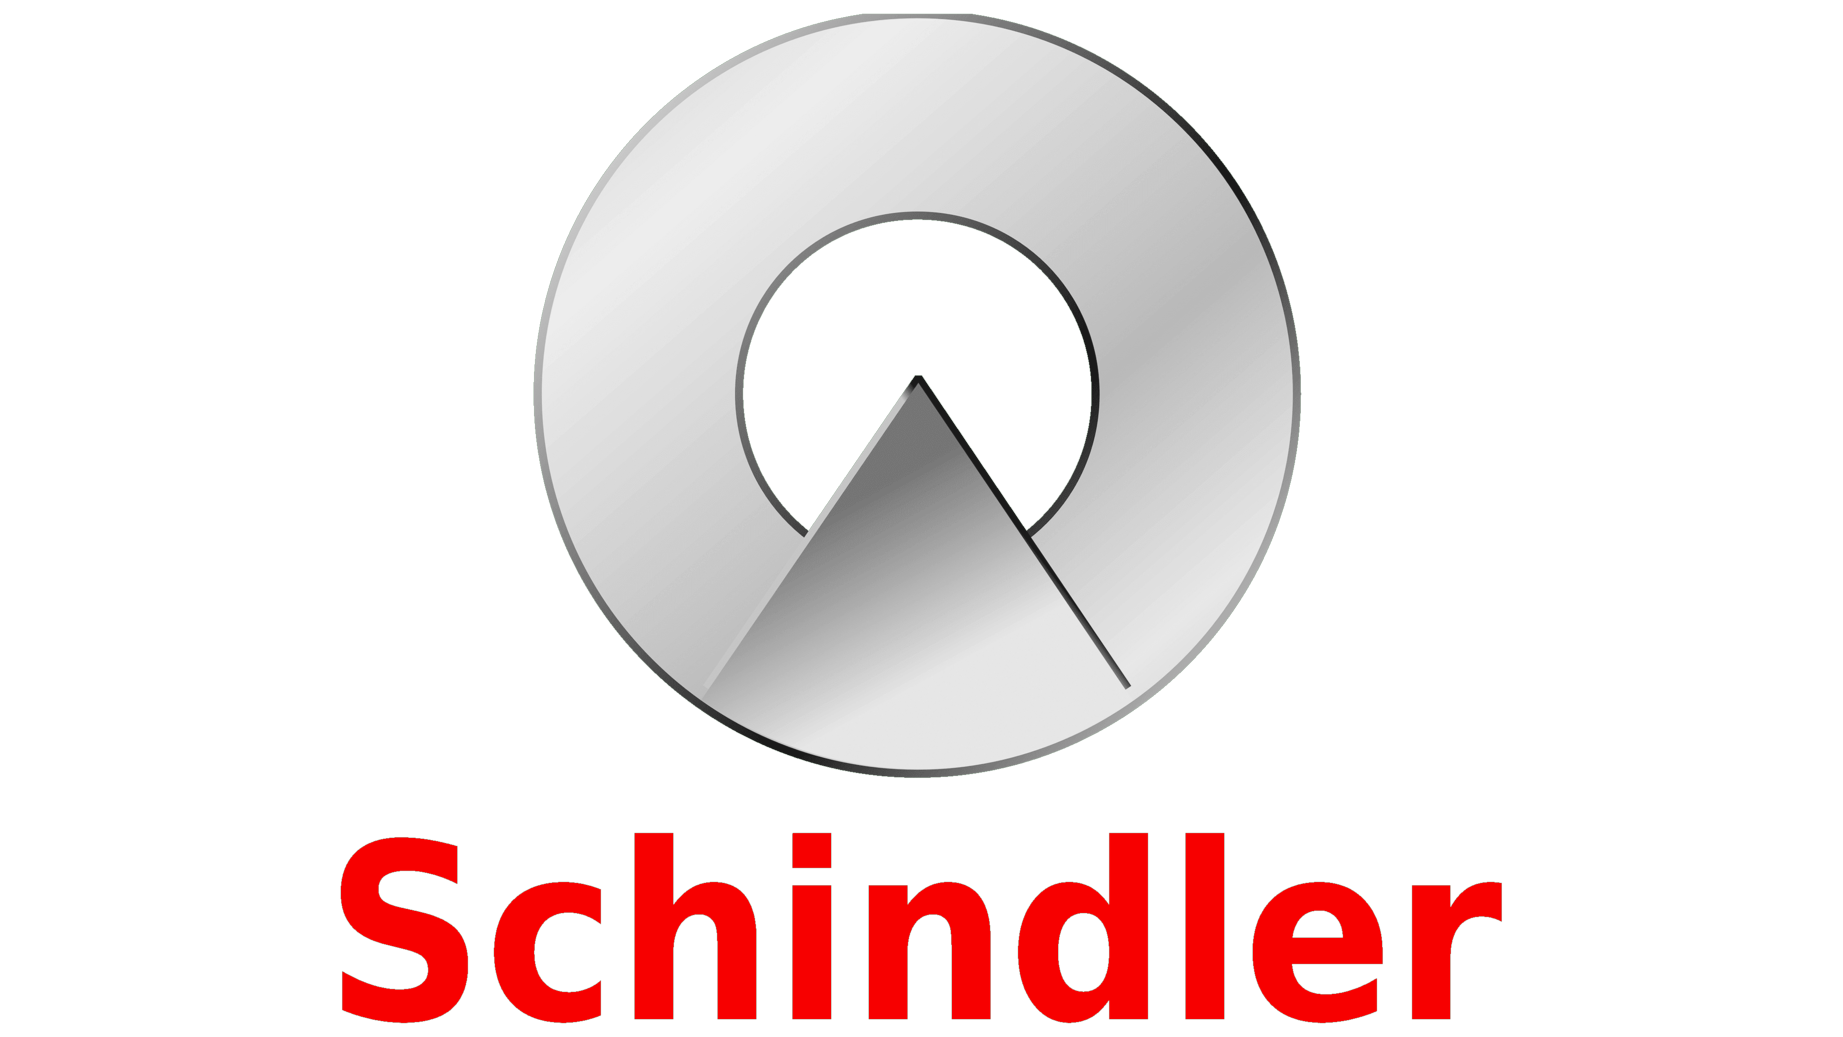 Schindler sign